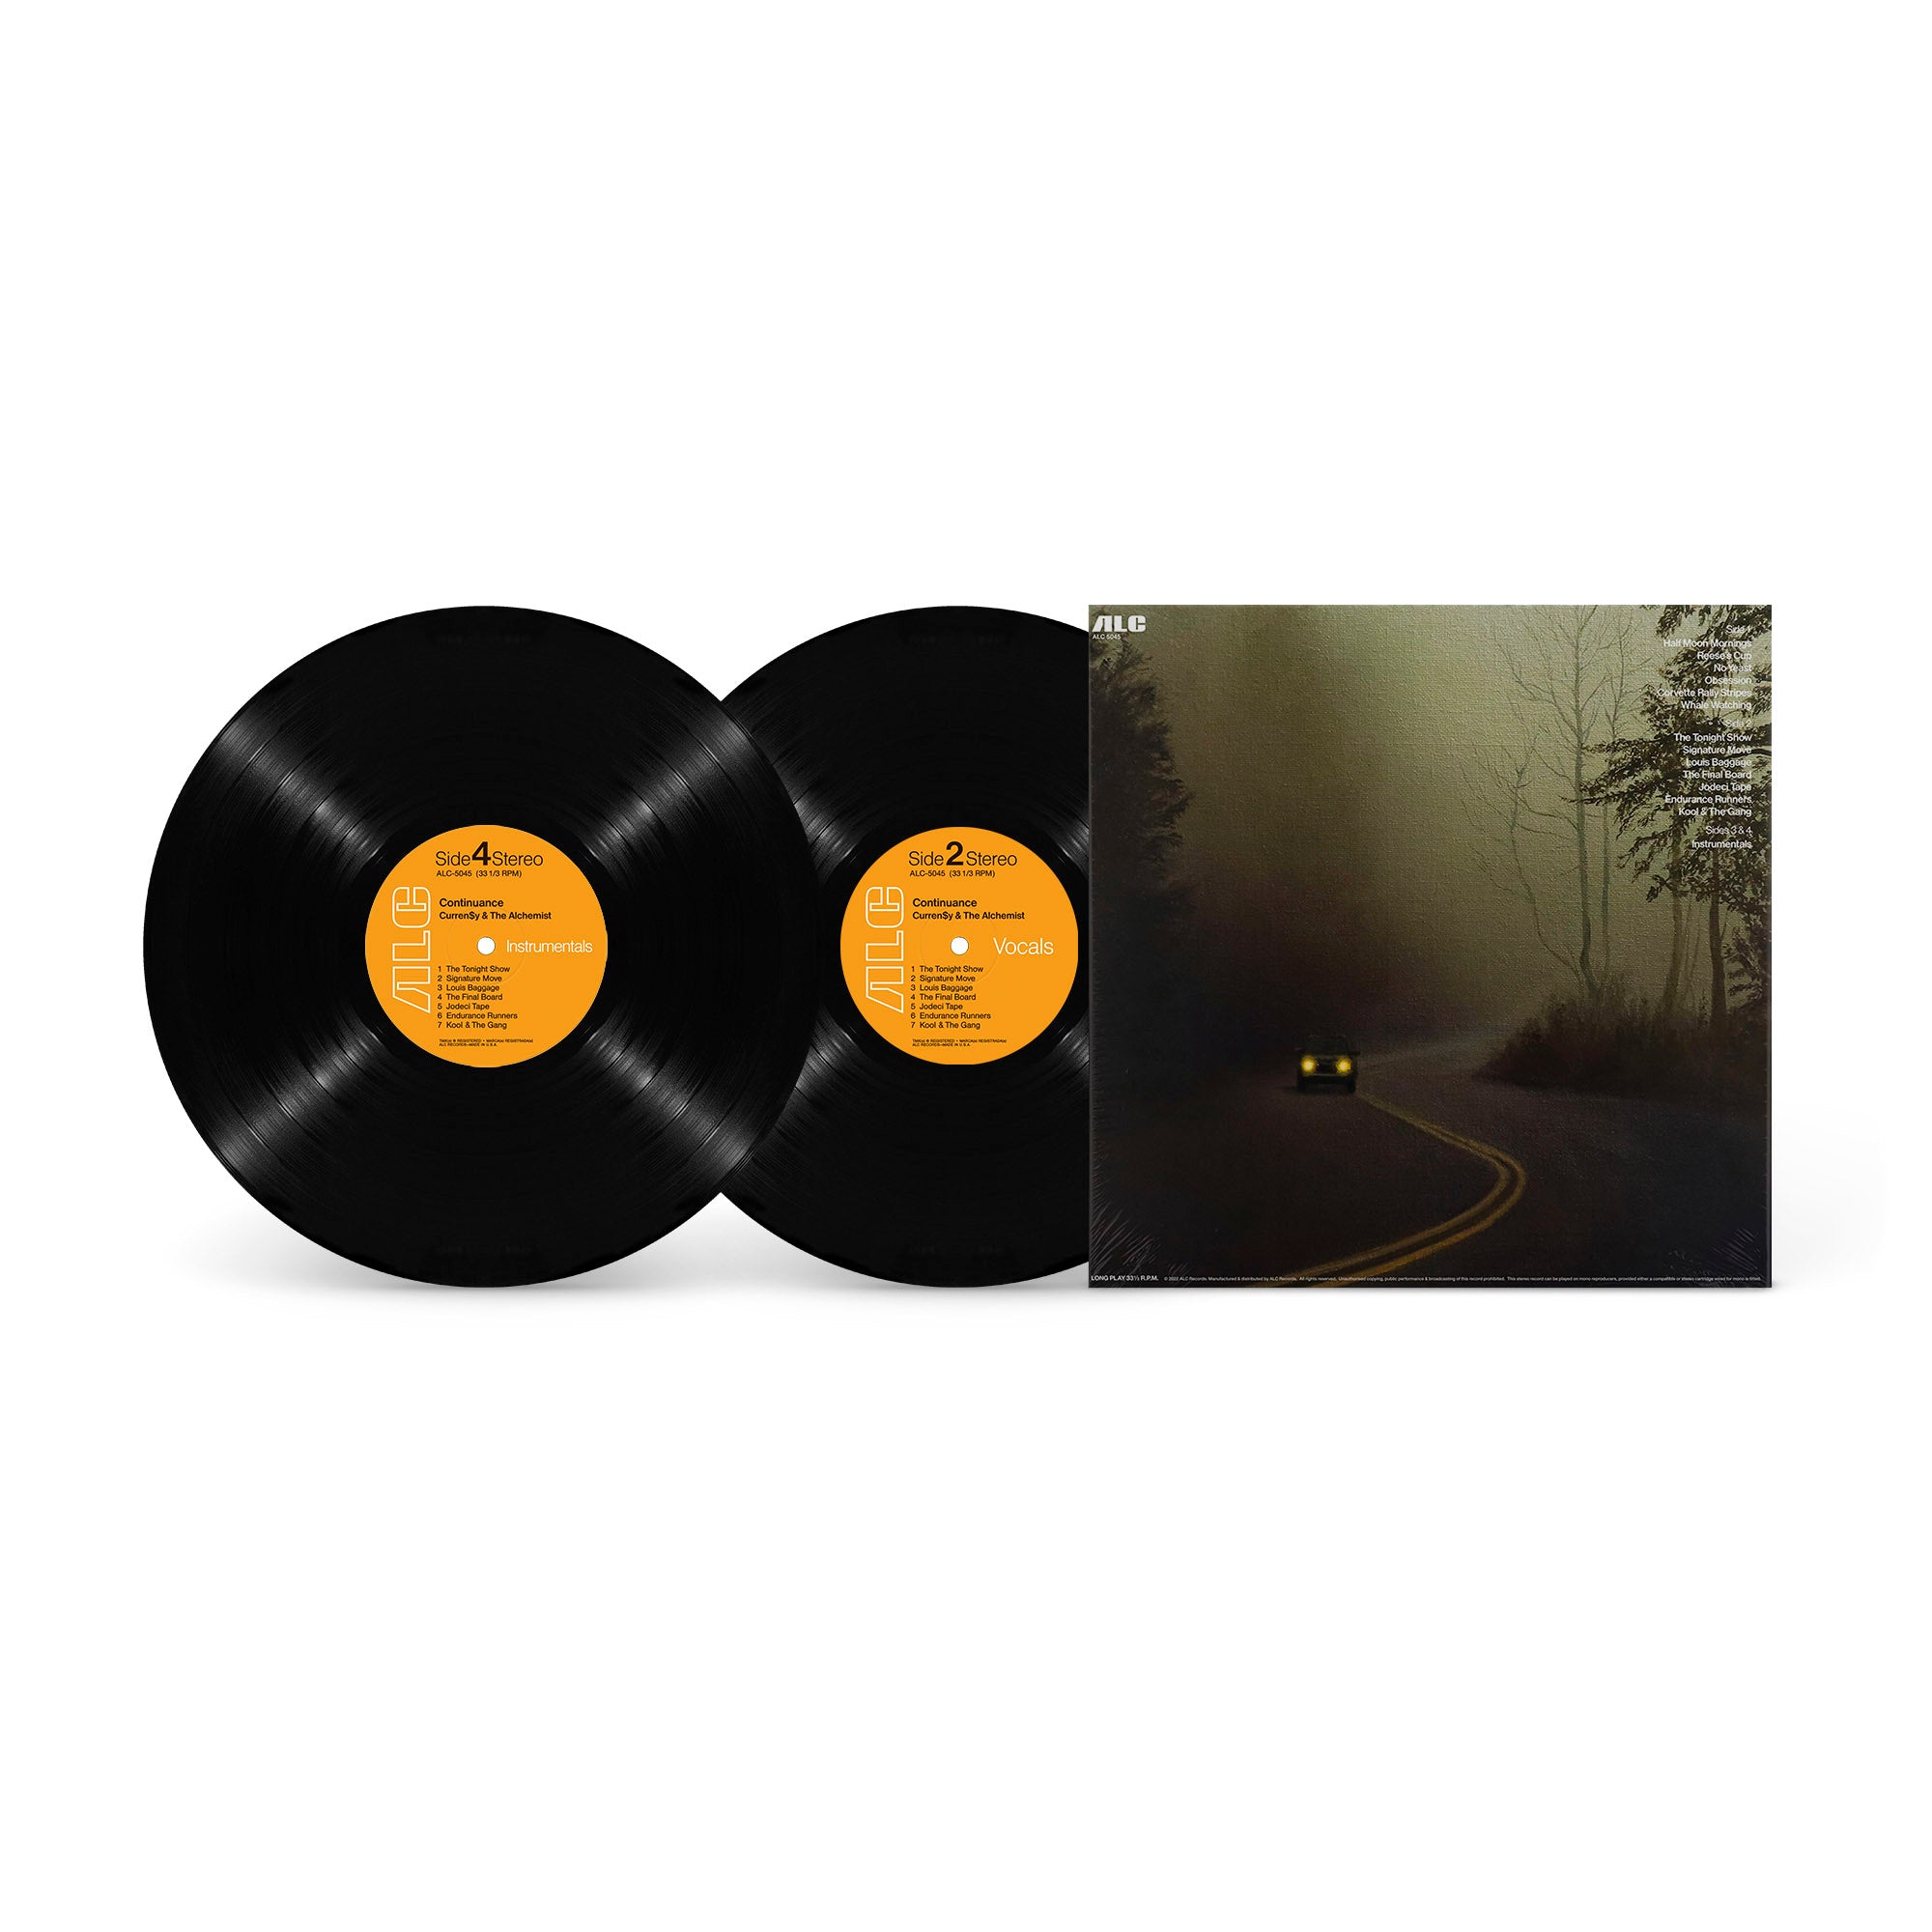 Continuance (2xLP - Black Vinyl)